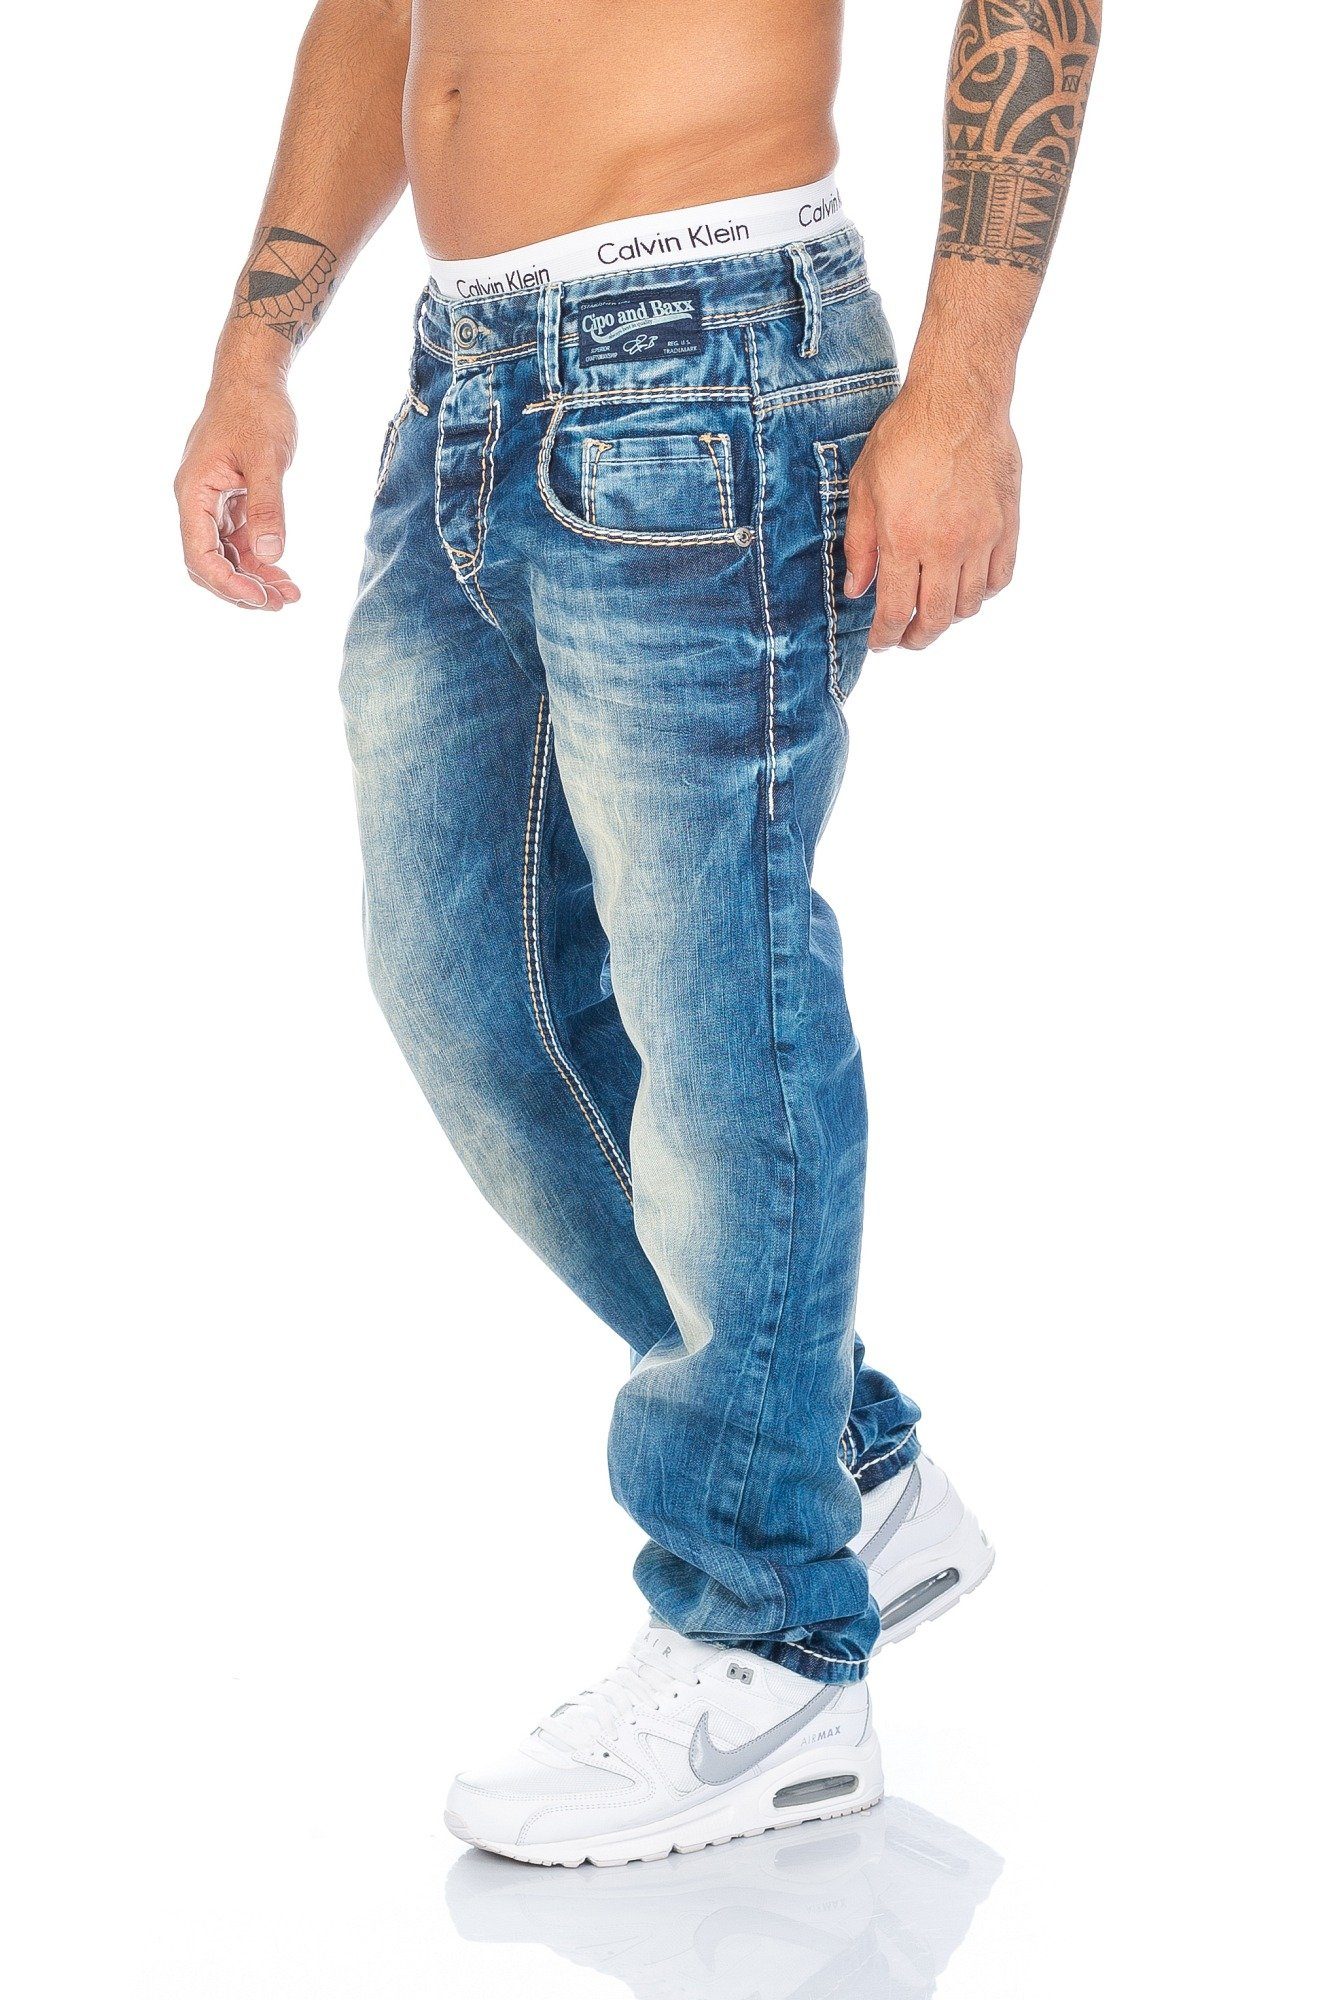 & Cipo mit Baxx Slim-fit-Jeans Herren dicken Kontrastnähten Jeans Hose